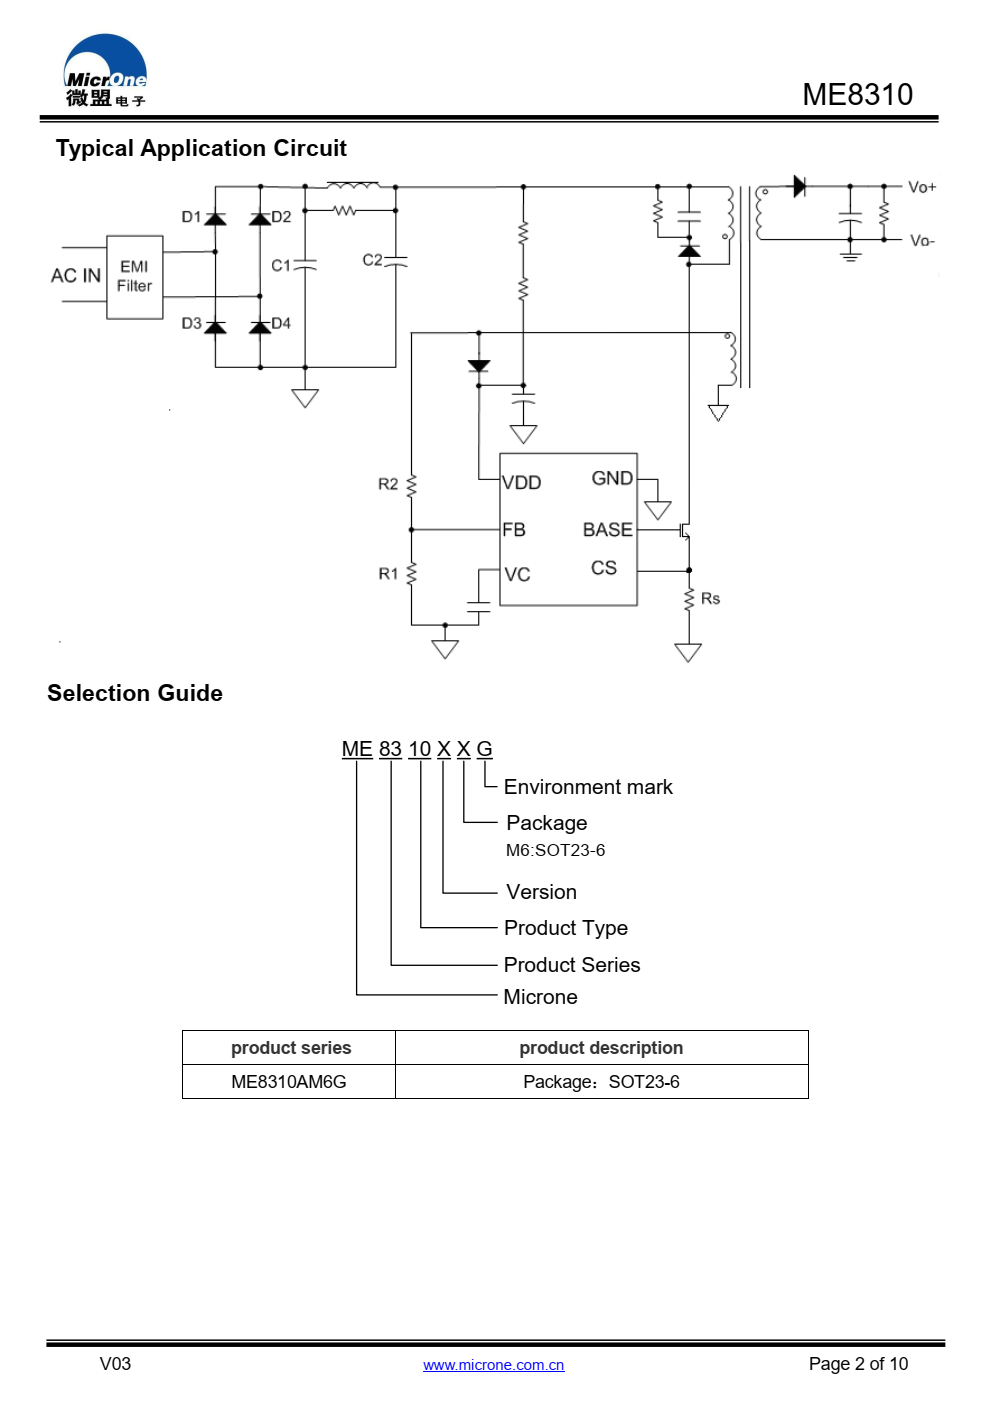 ME8310是一款高性能离线PSR  低功率AC/DC充电器和适配器控制器  应用